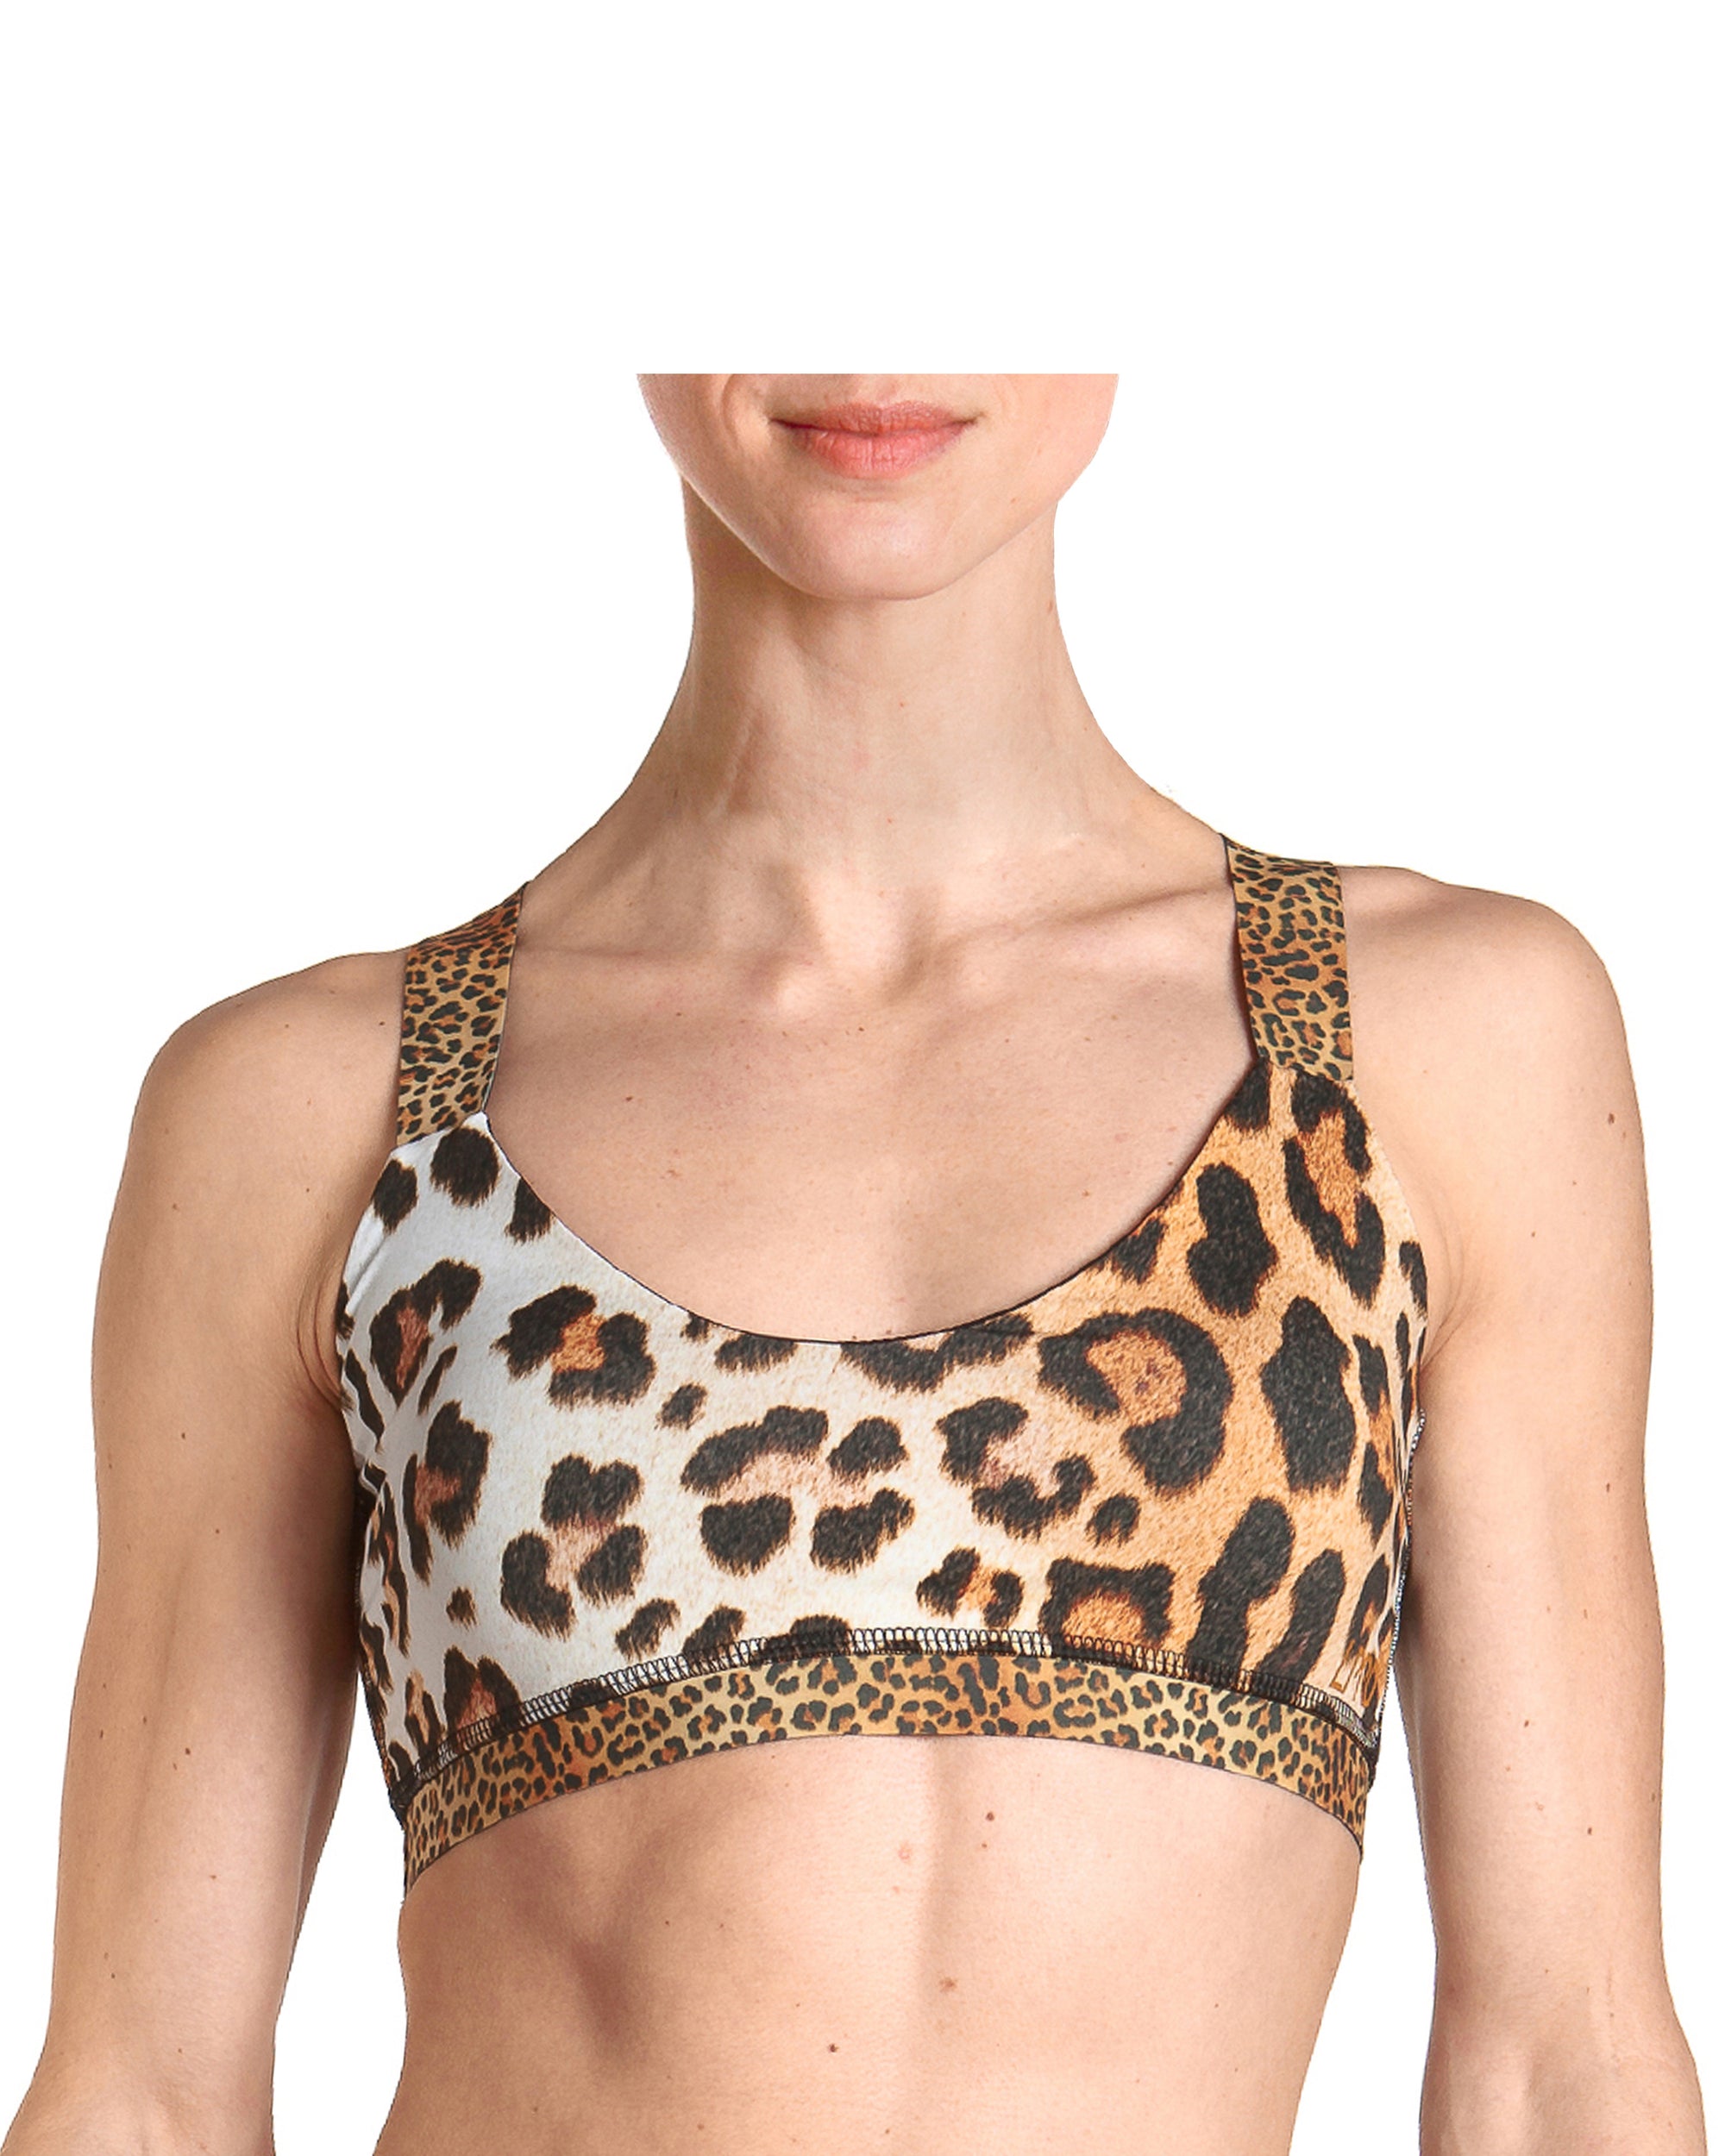 Athletic sports bra - Leopard print - Comfortable non-slip